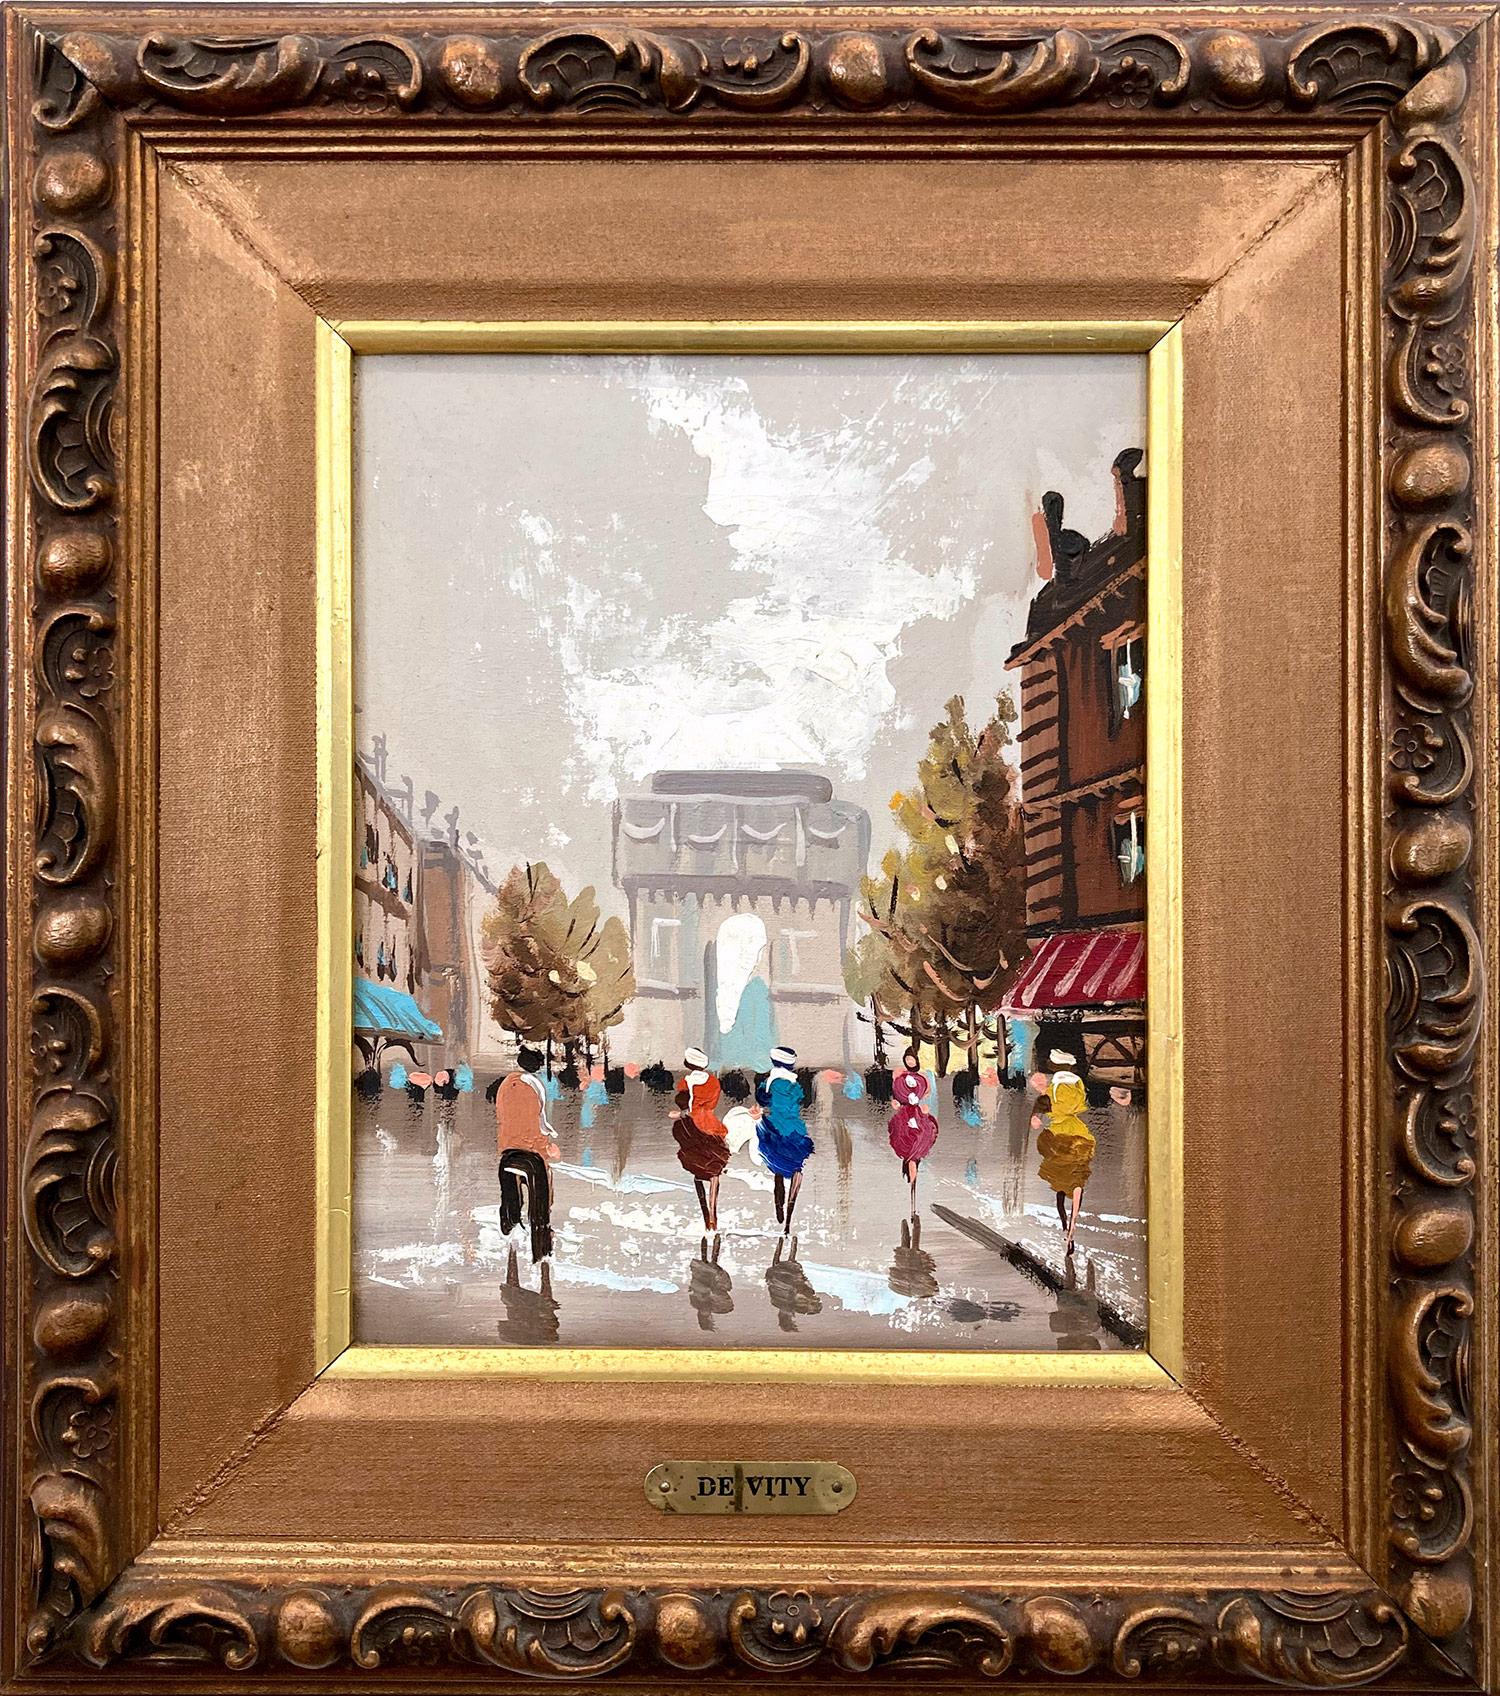 Antonio DeVity Figurative Painting - "Parisian Street Scene Arc de Triomphe" Post-Impressionist Oil Paint on Canvas